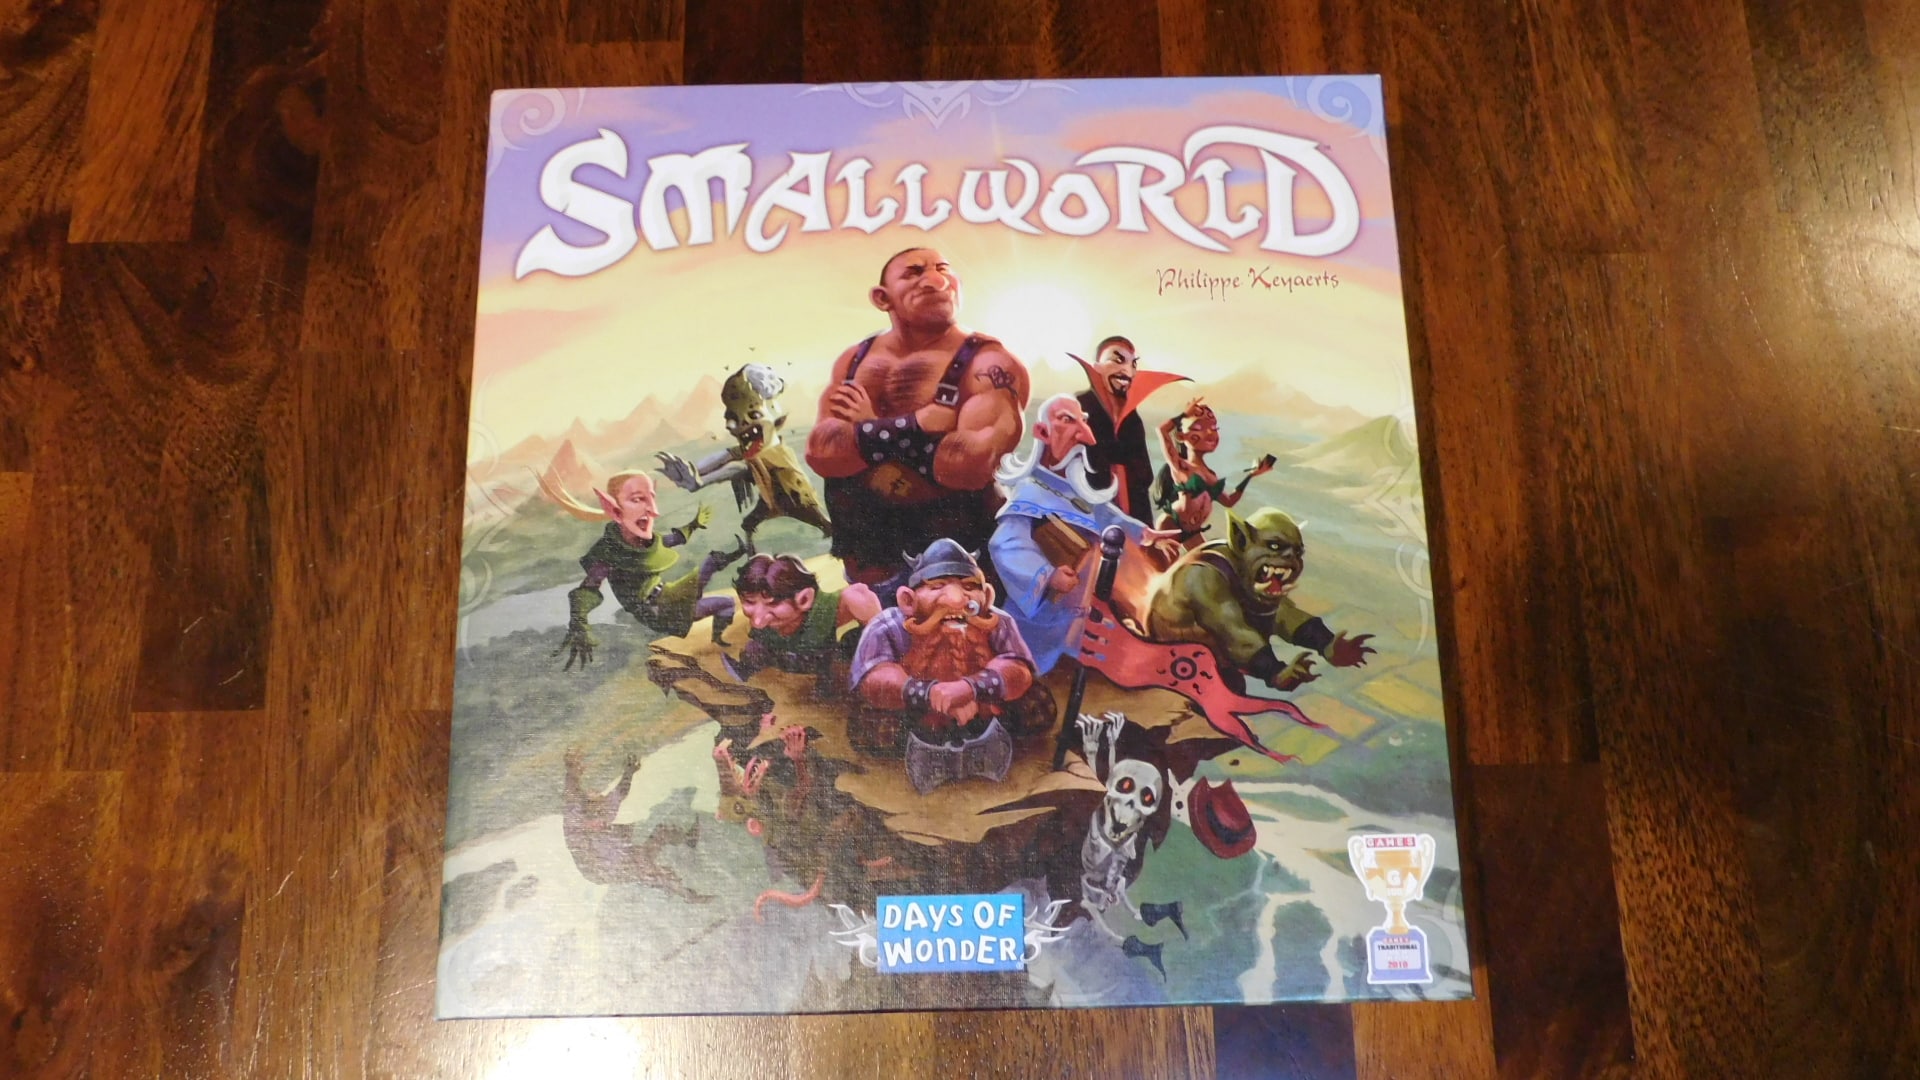 Closeup of the Small World box cover.